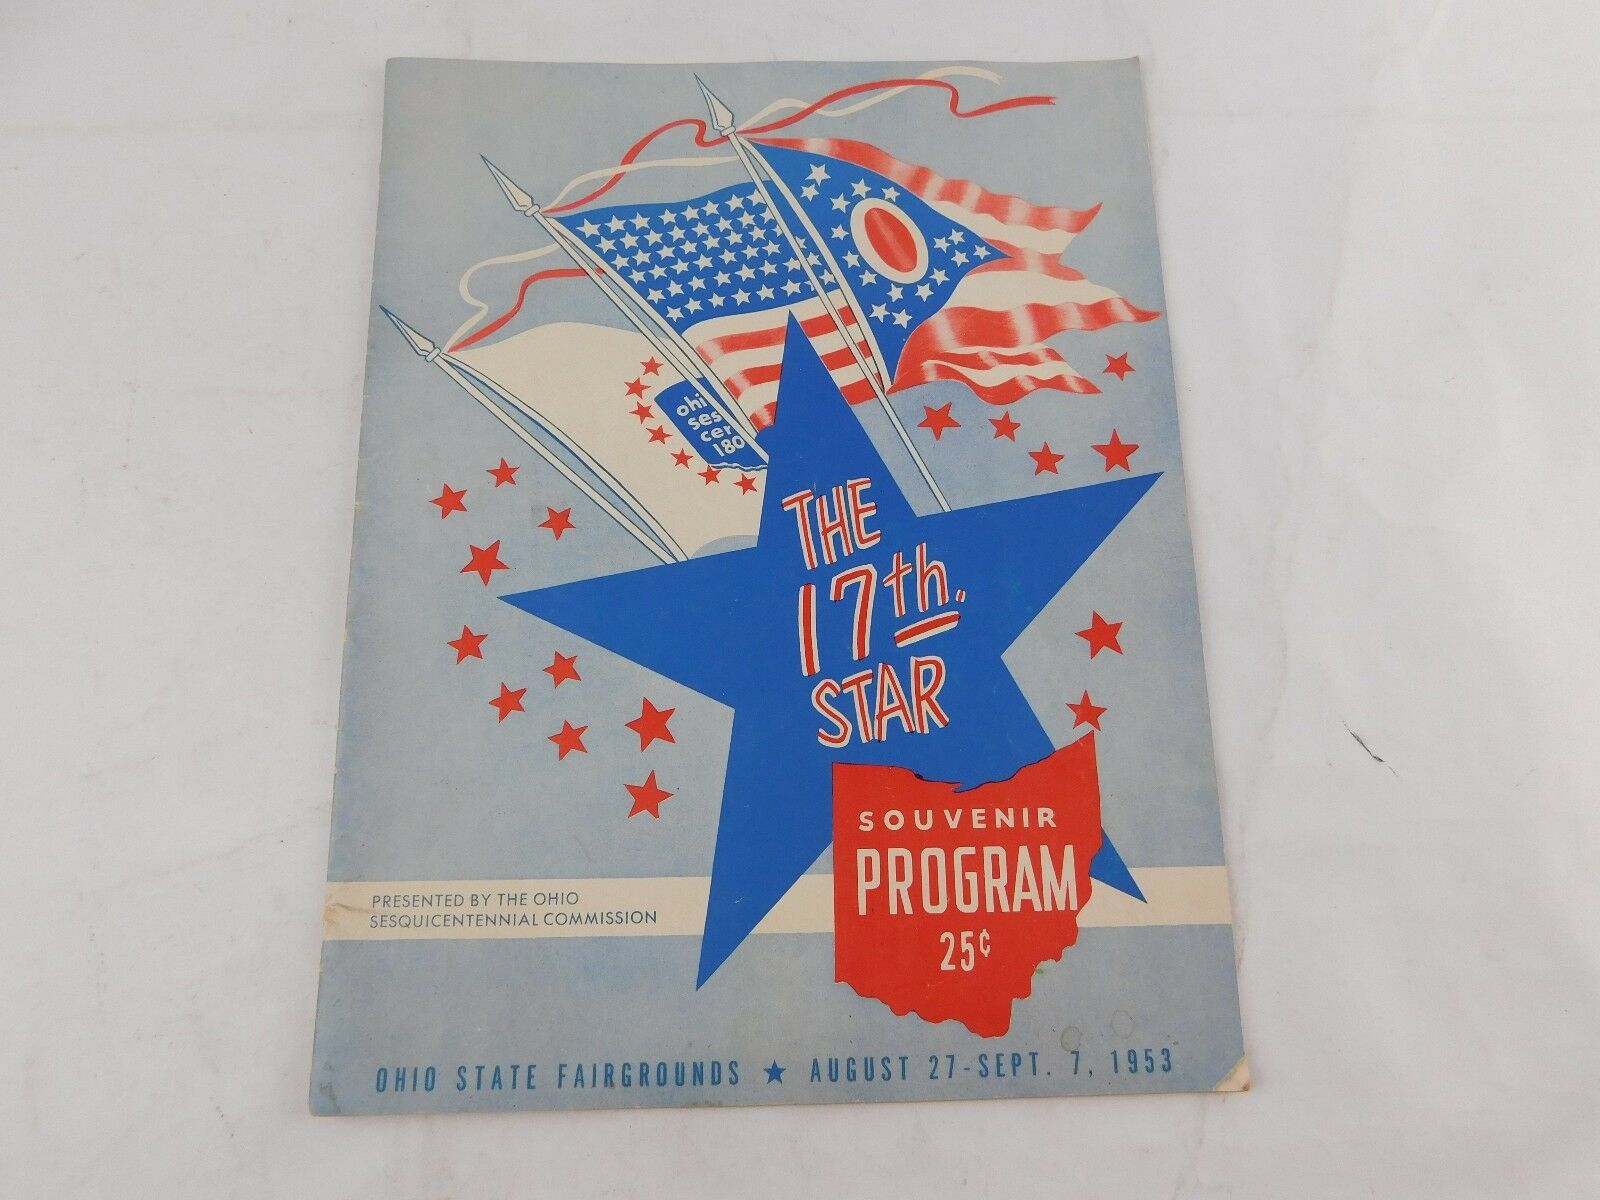 The 17th Star Souvenir Program Play Ohio State Fairgrounds 1953 Vintage